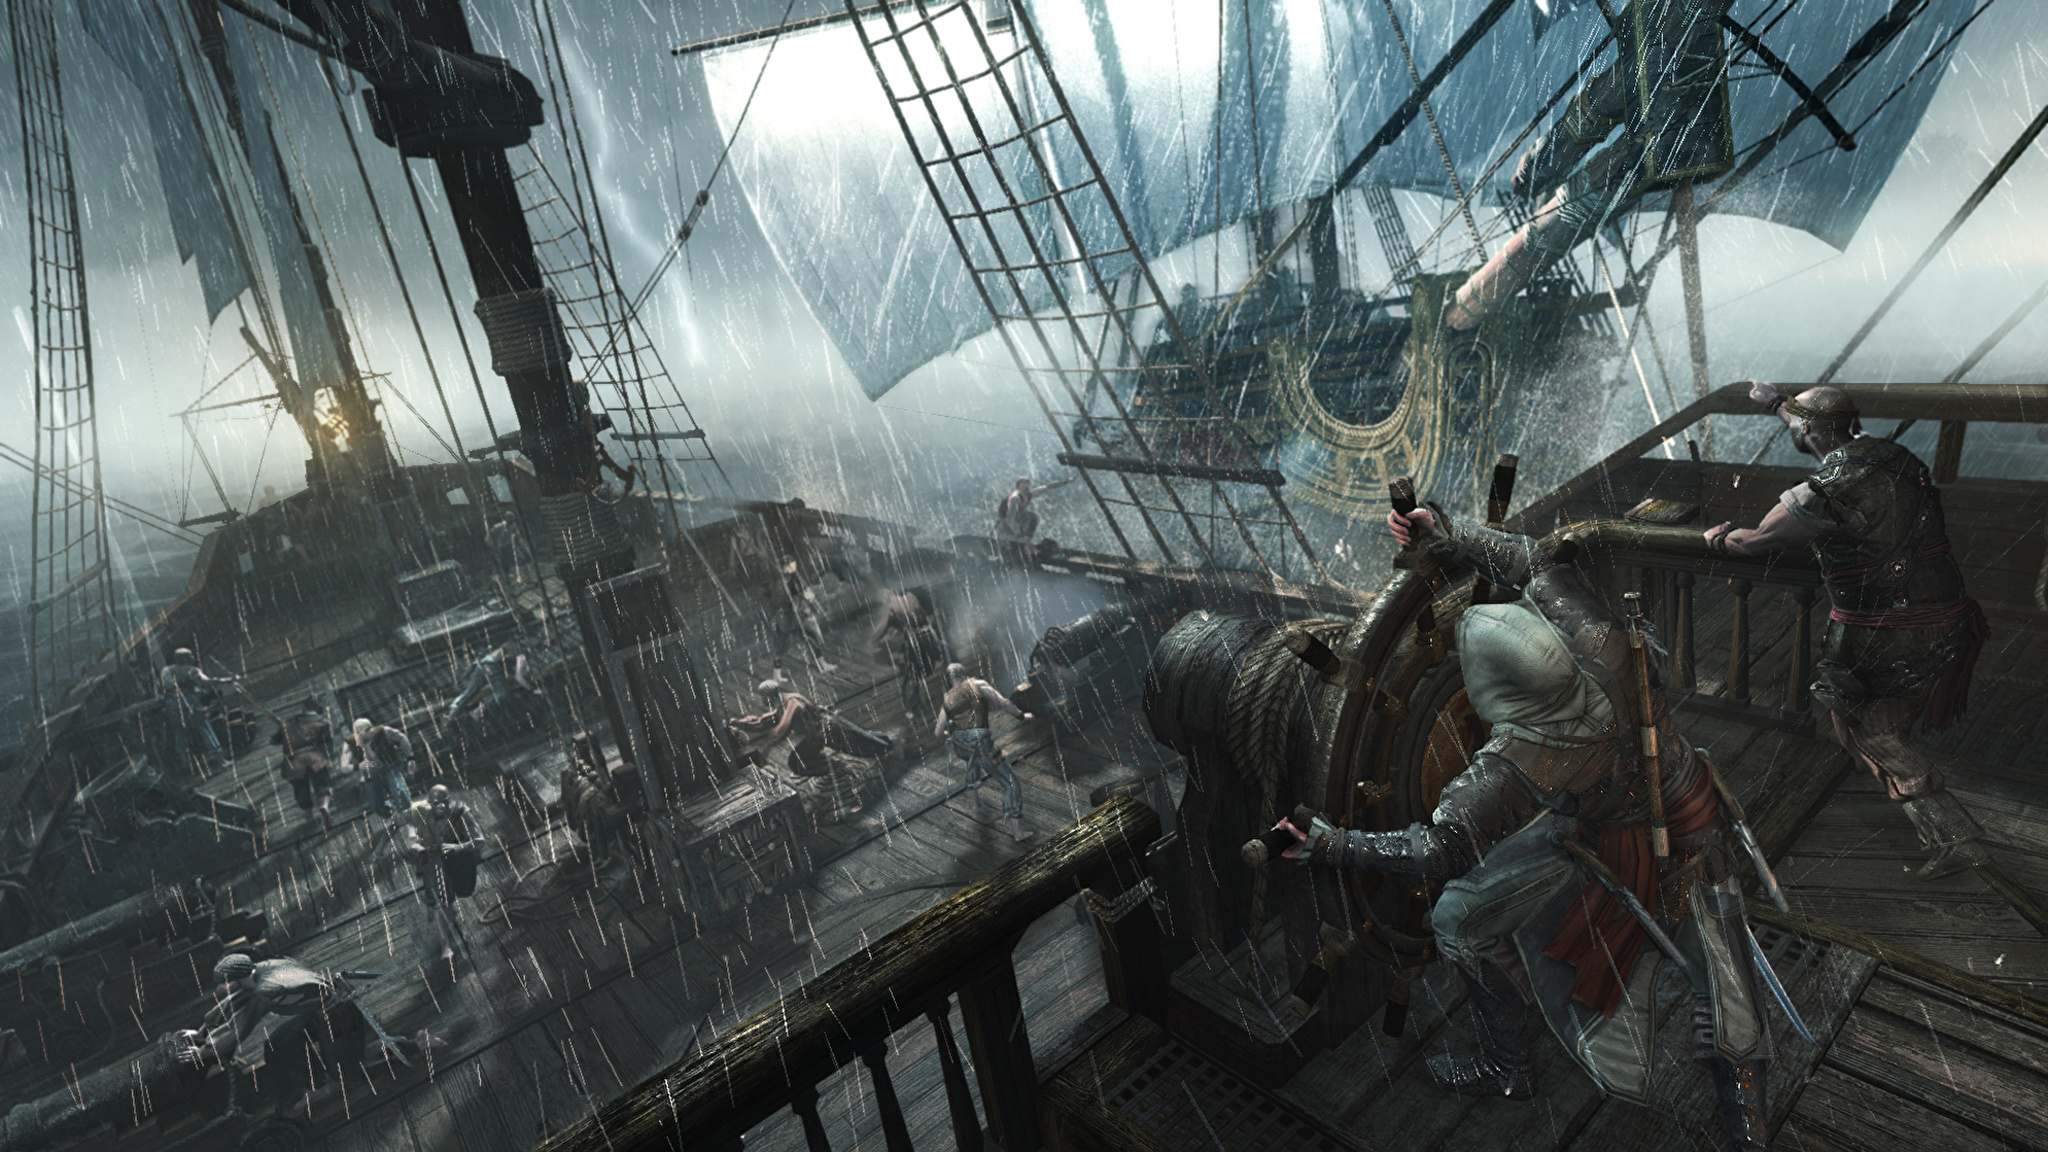 Ассасин 4 часть. Assassin's Creed 4 Black Flag. Летучий голландец ассасин Крид 4. Корабль призрак ассасин Крид 4.